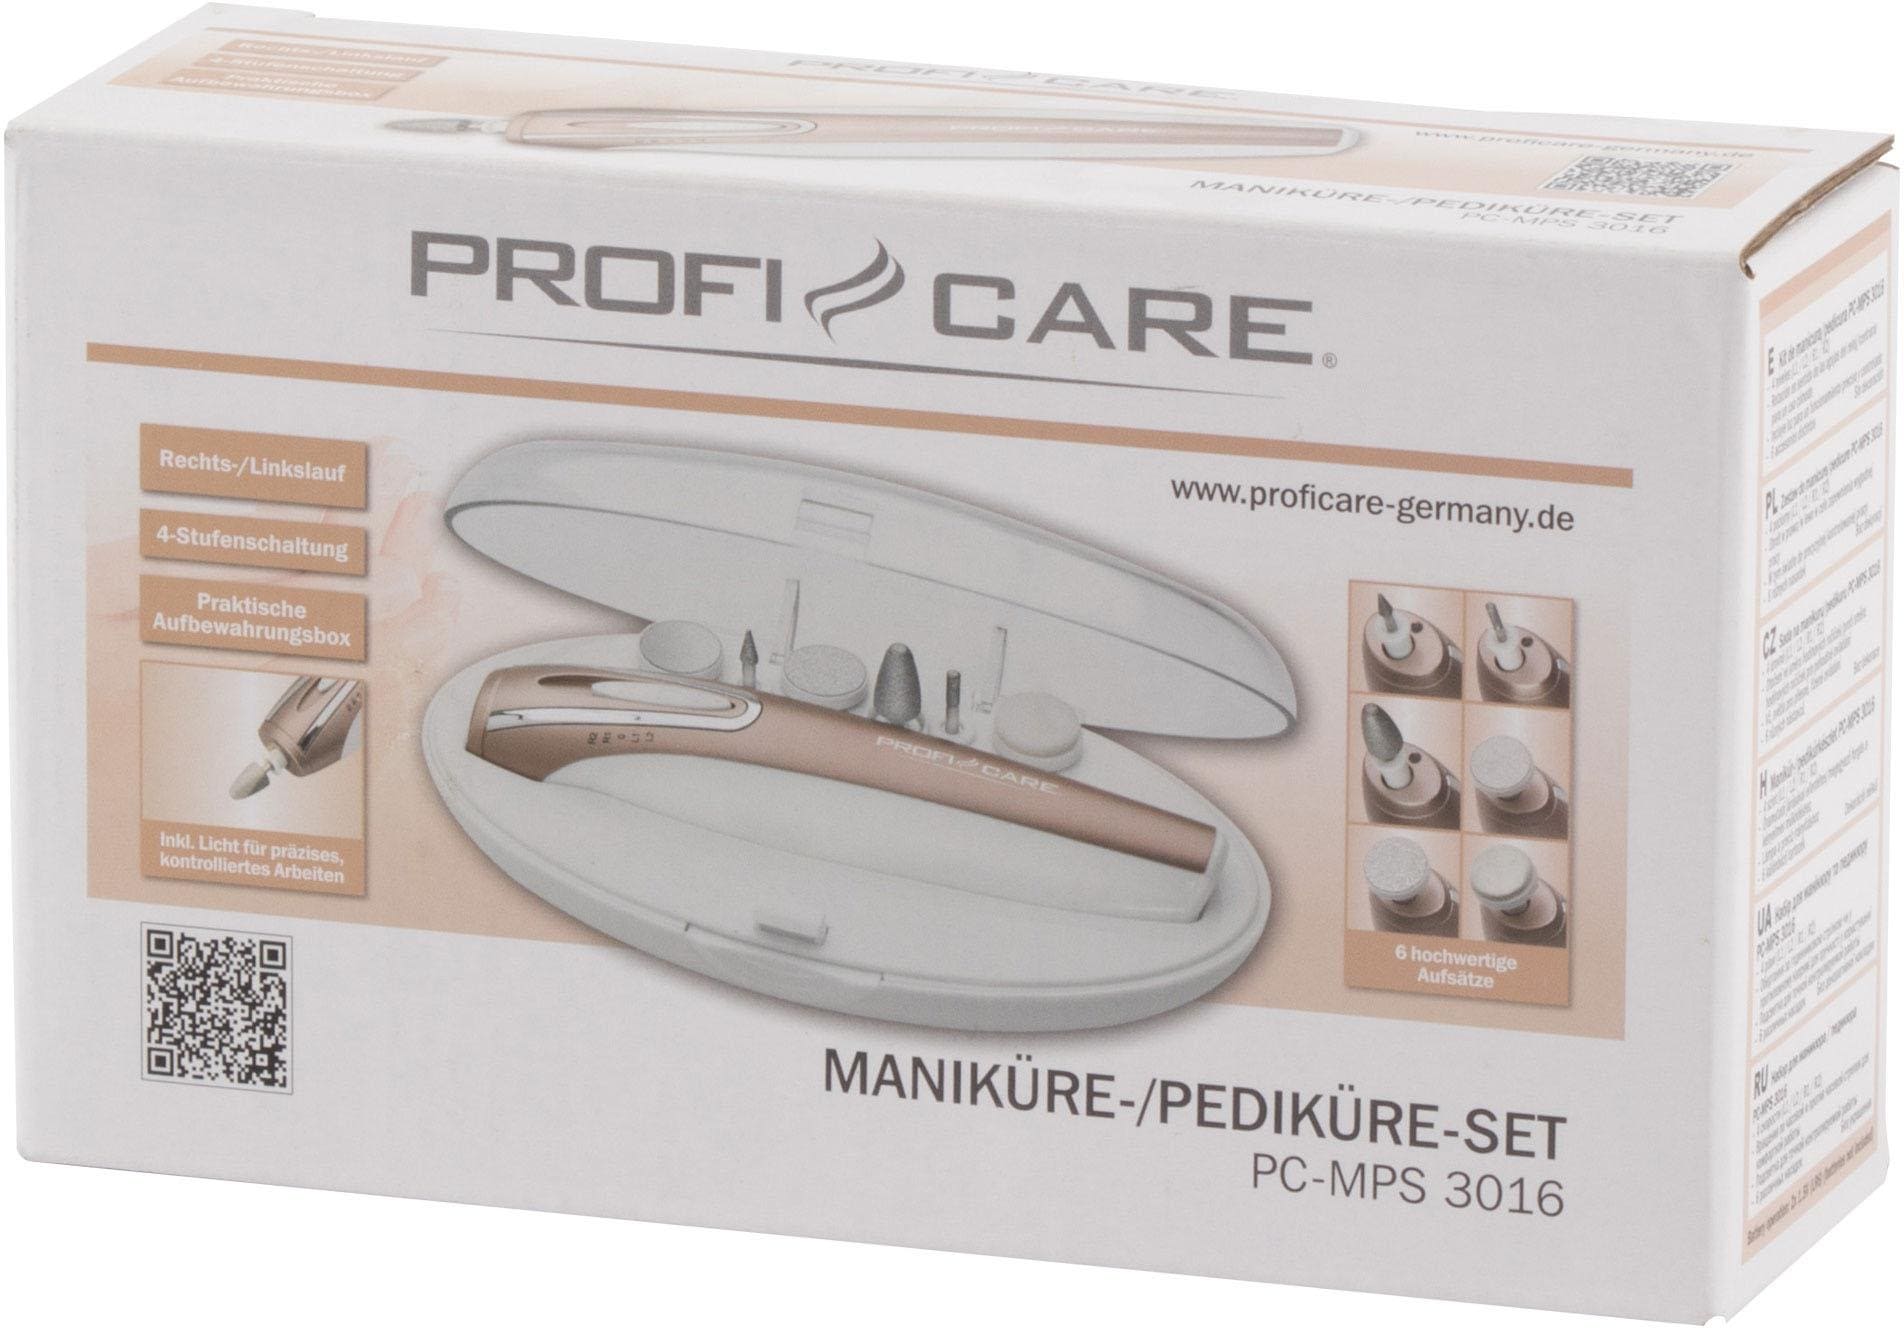 ProfiCare Maniküre-Pediküre-Set jetzt kaufen bei 3016« OTTO »PC-MPS